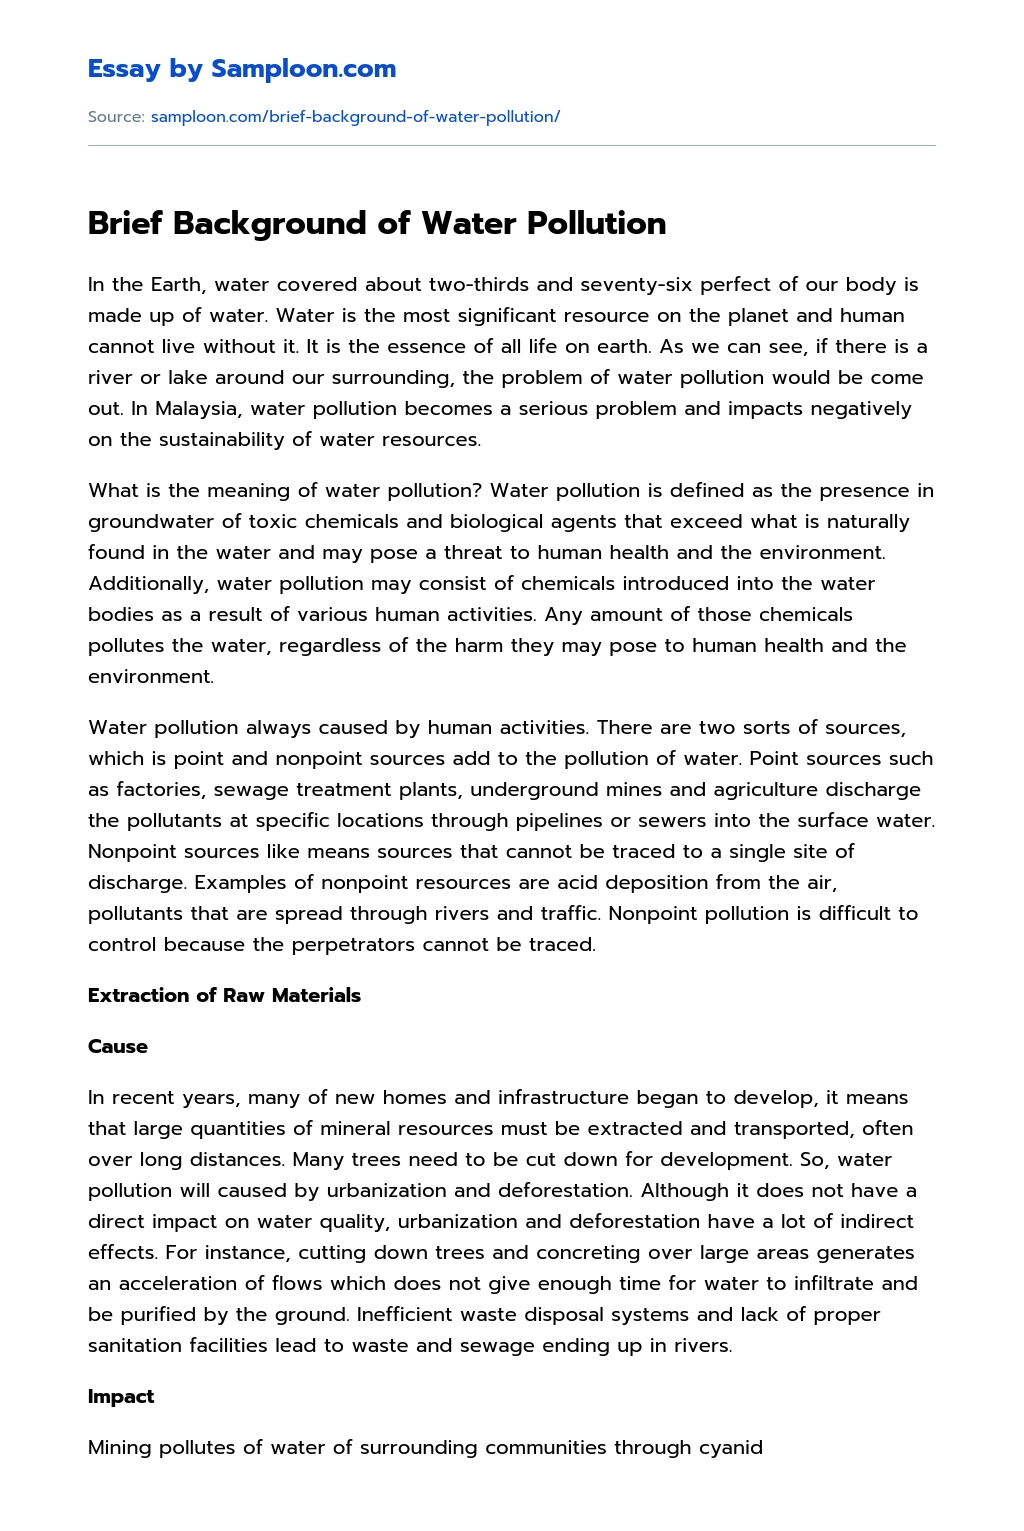 Brief Background of Water Pollution essay